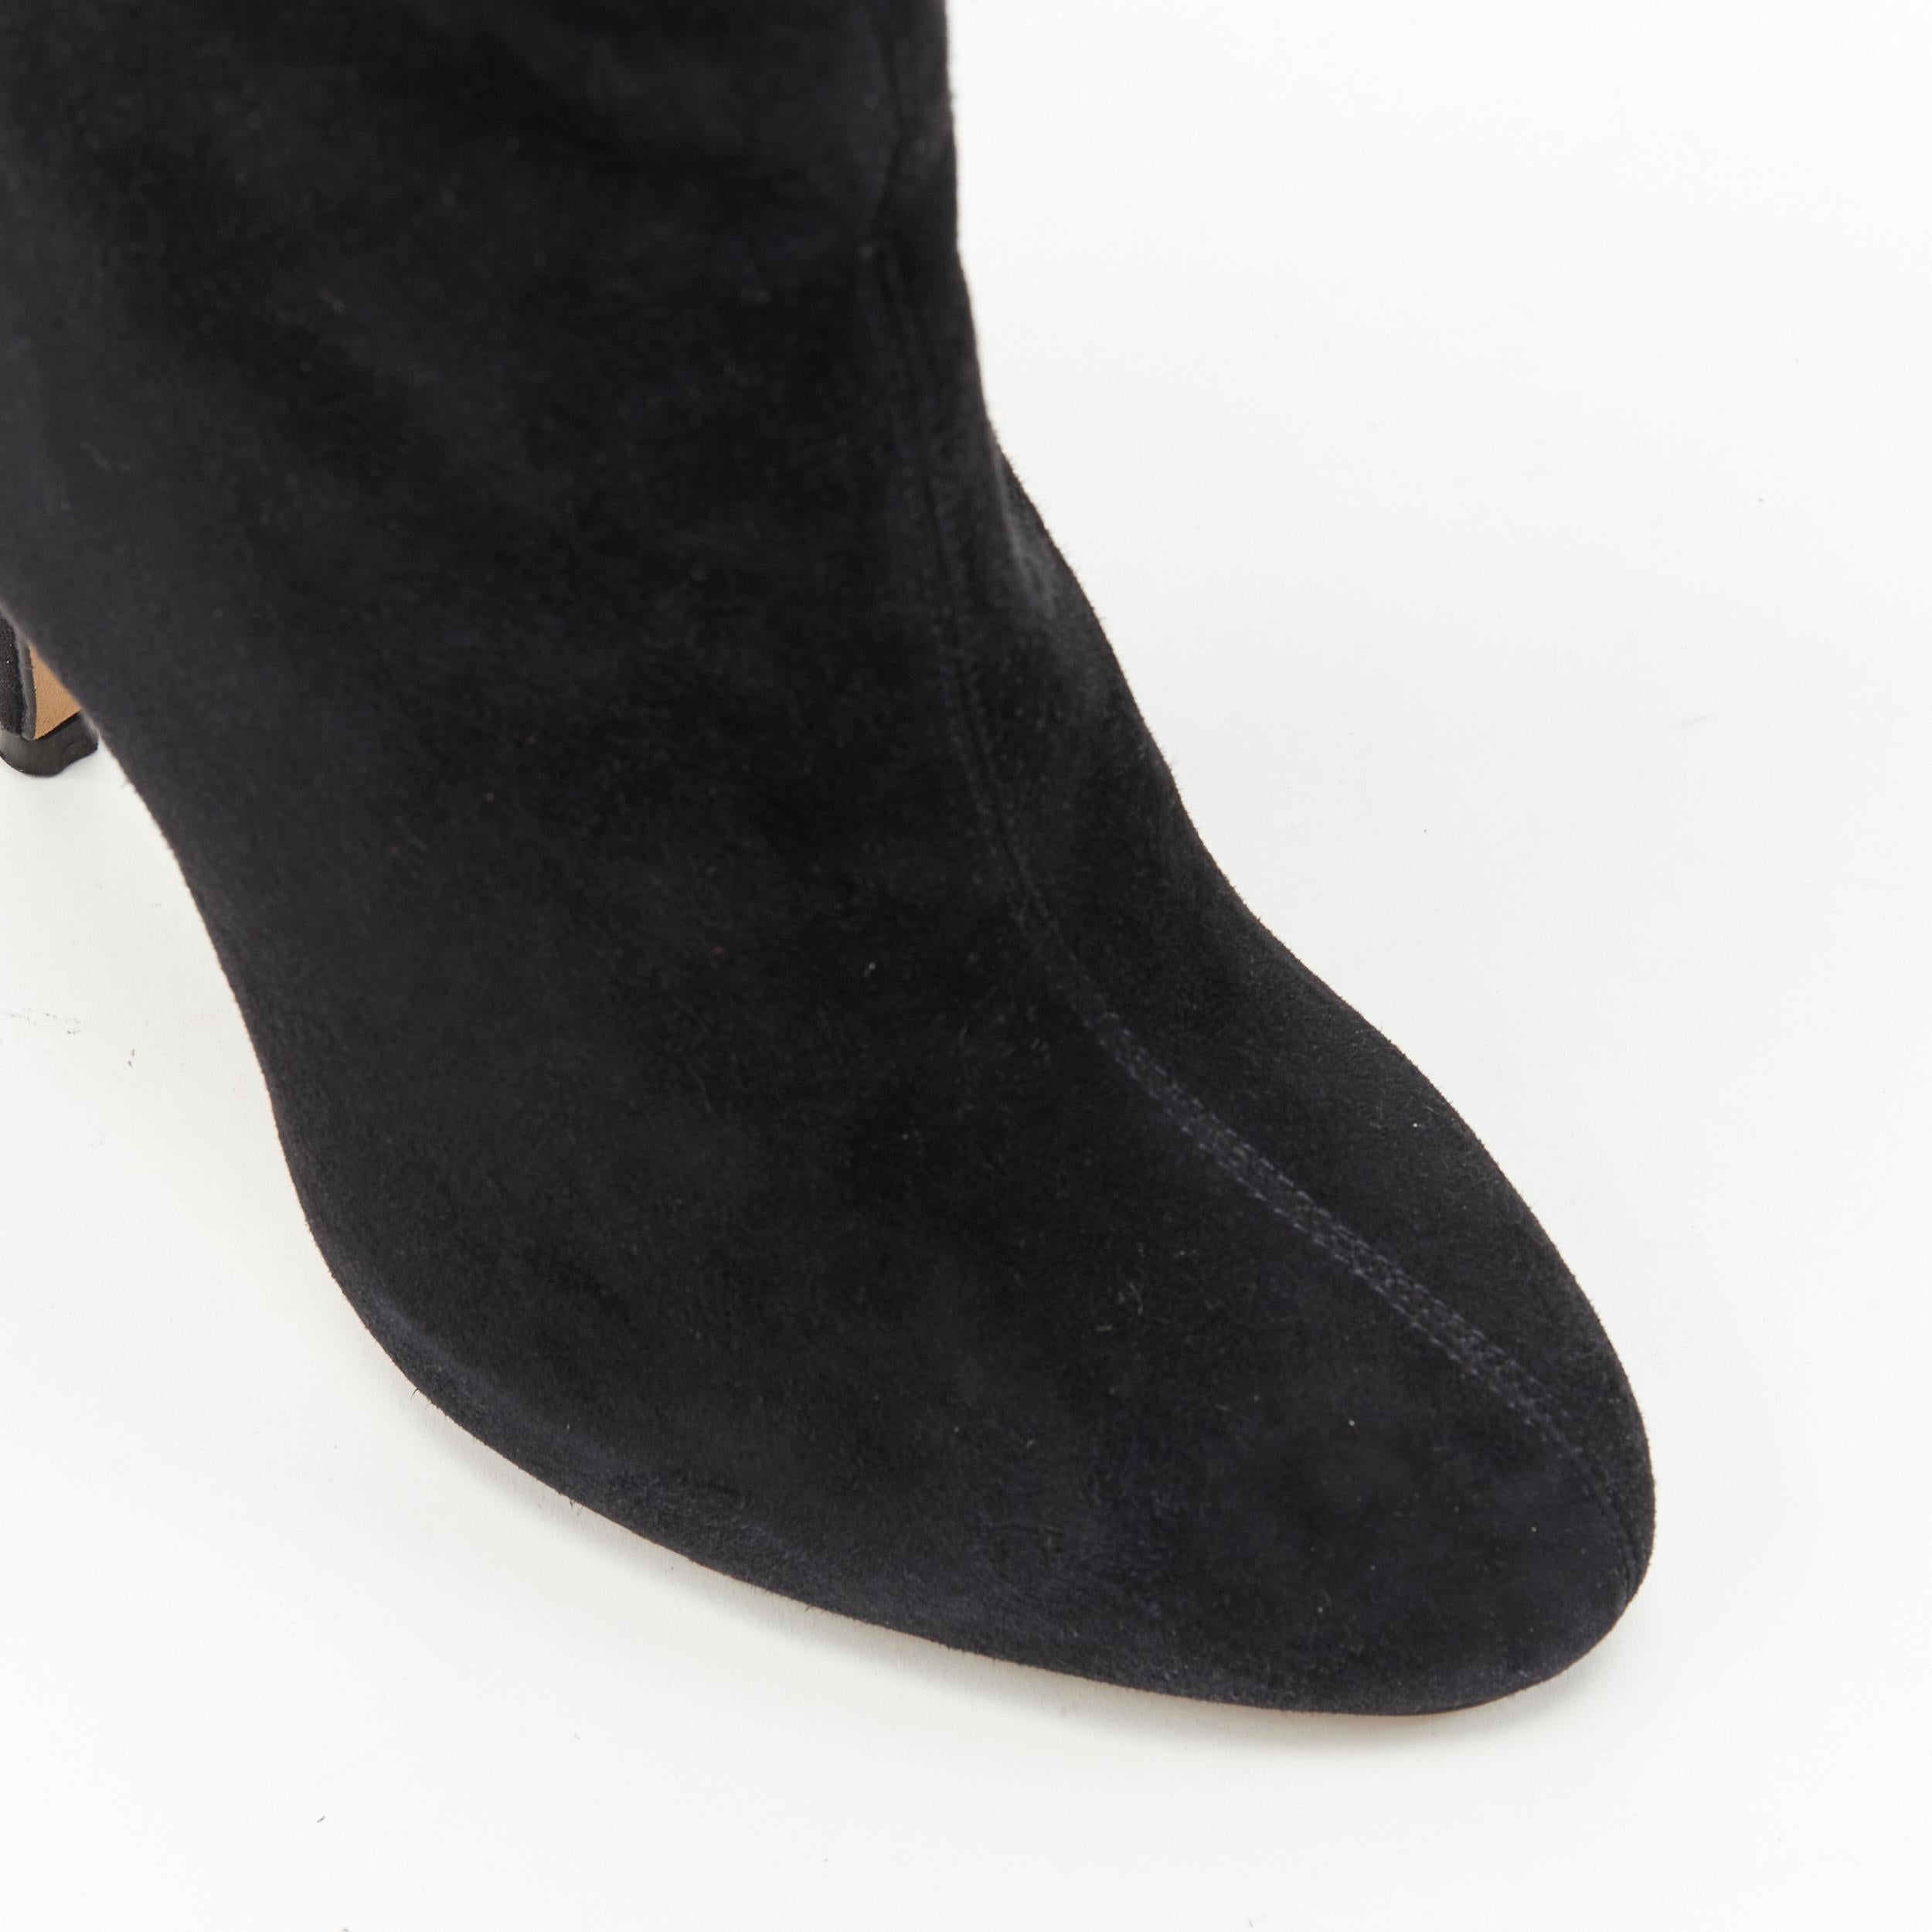 Women's BRIAN ATWOOD black suede leather platform high heel thigh high boot EU38